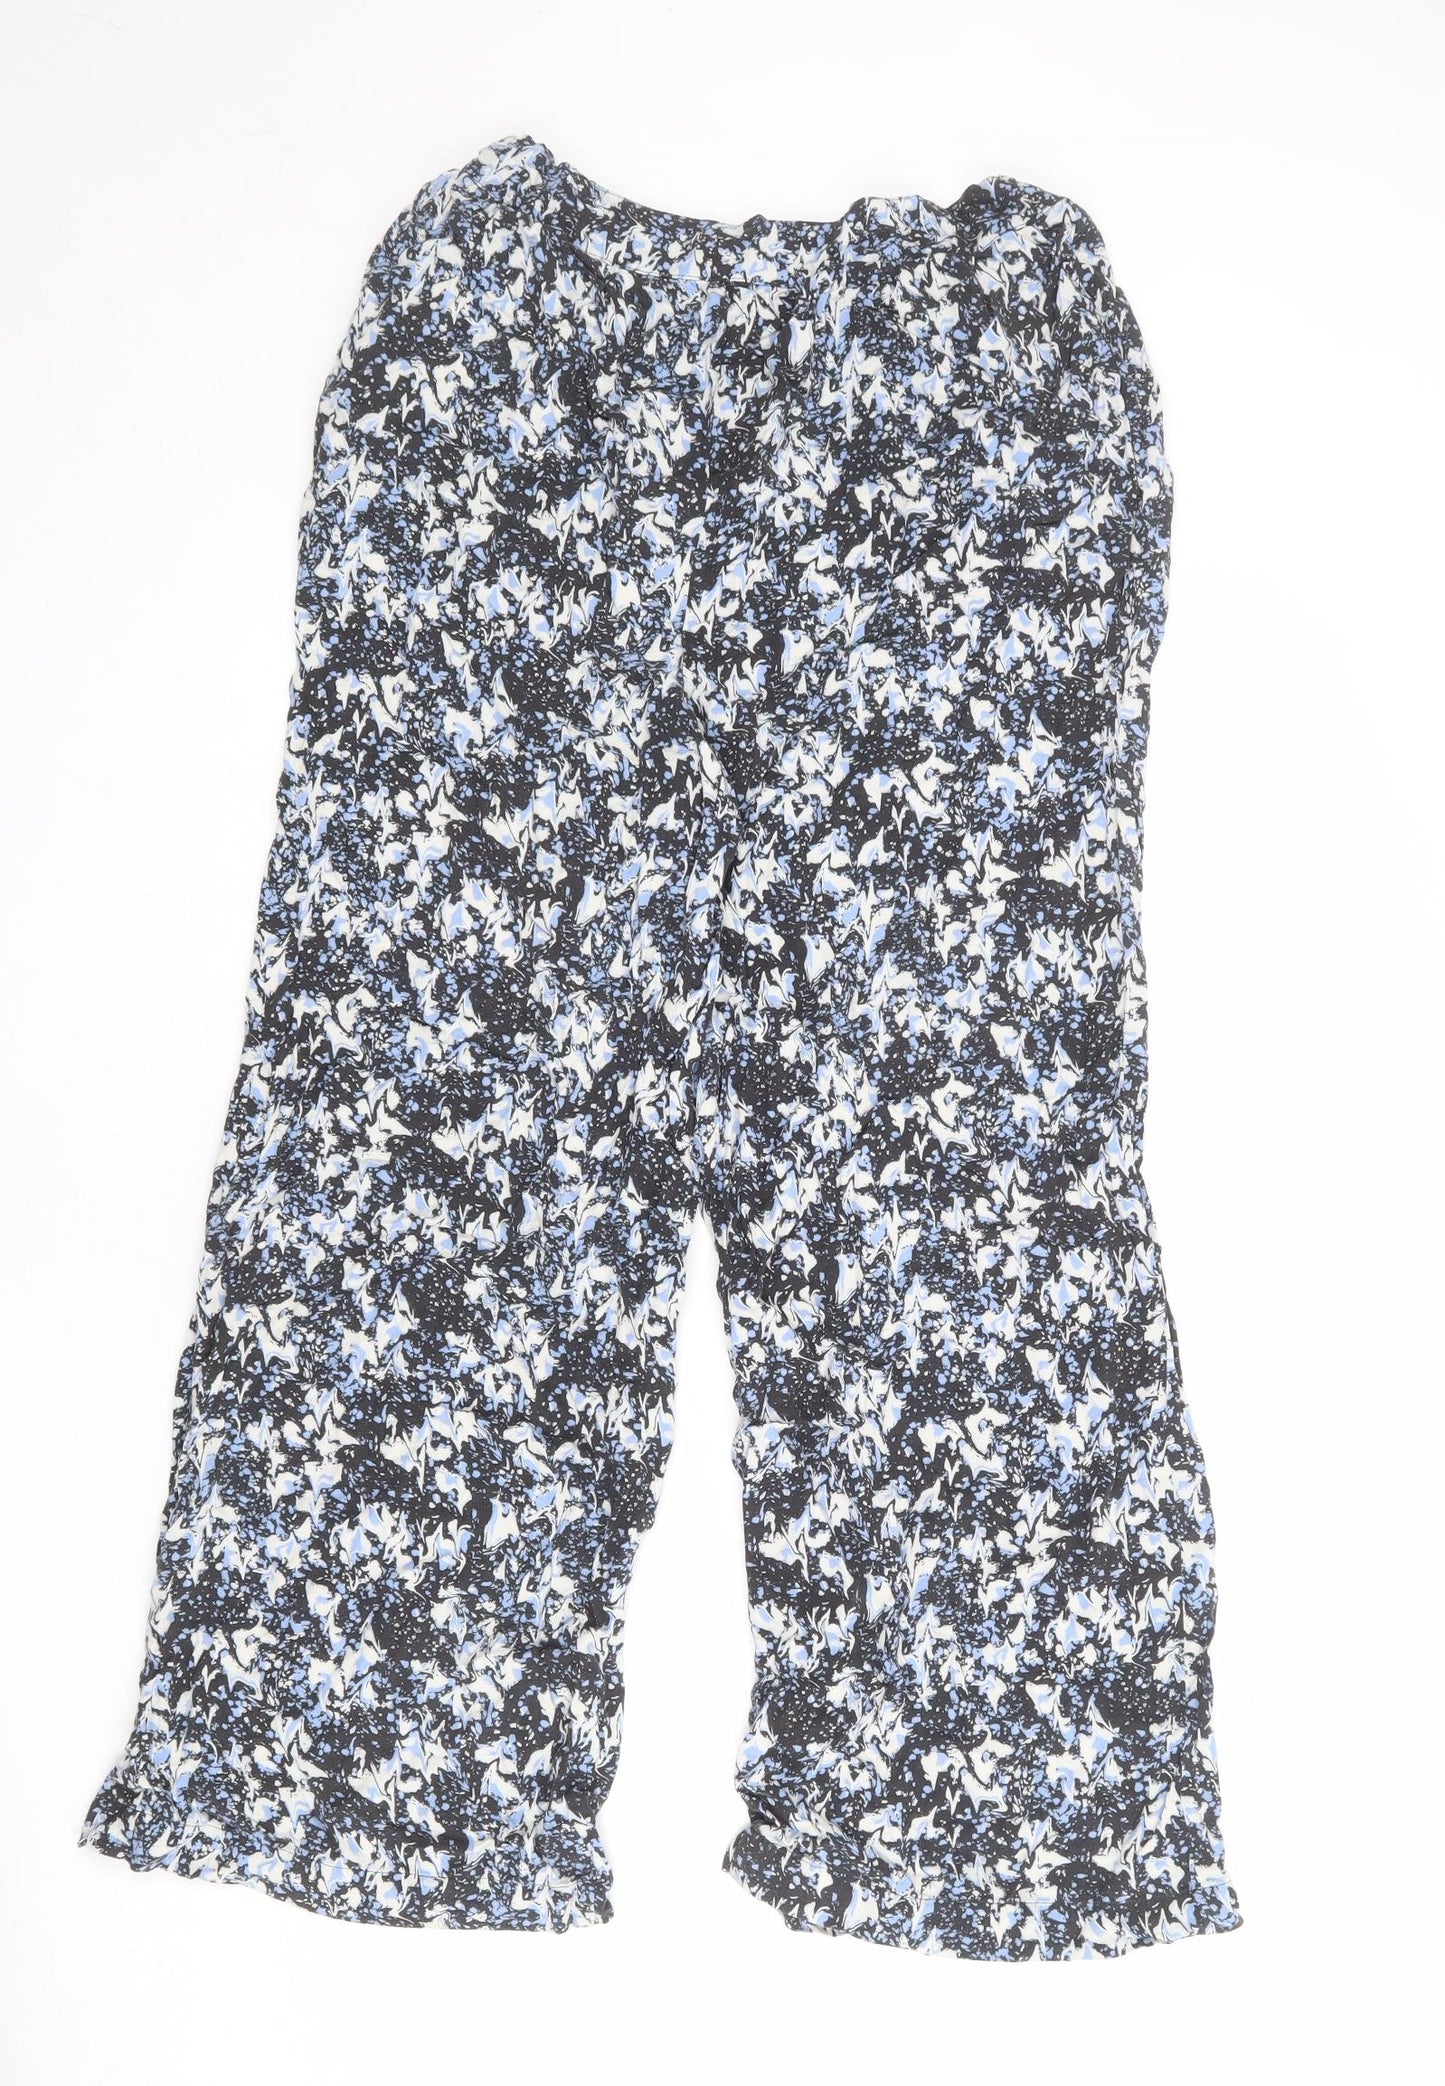 NEXT Womens Multicoloured Geometric Viscose Trousers Size 14 L25 in Regular